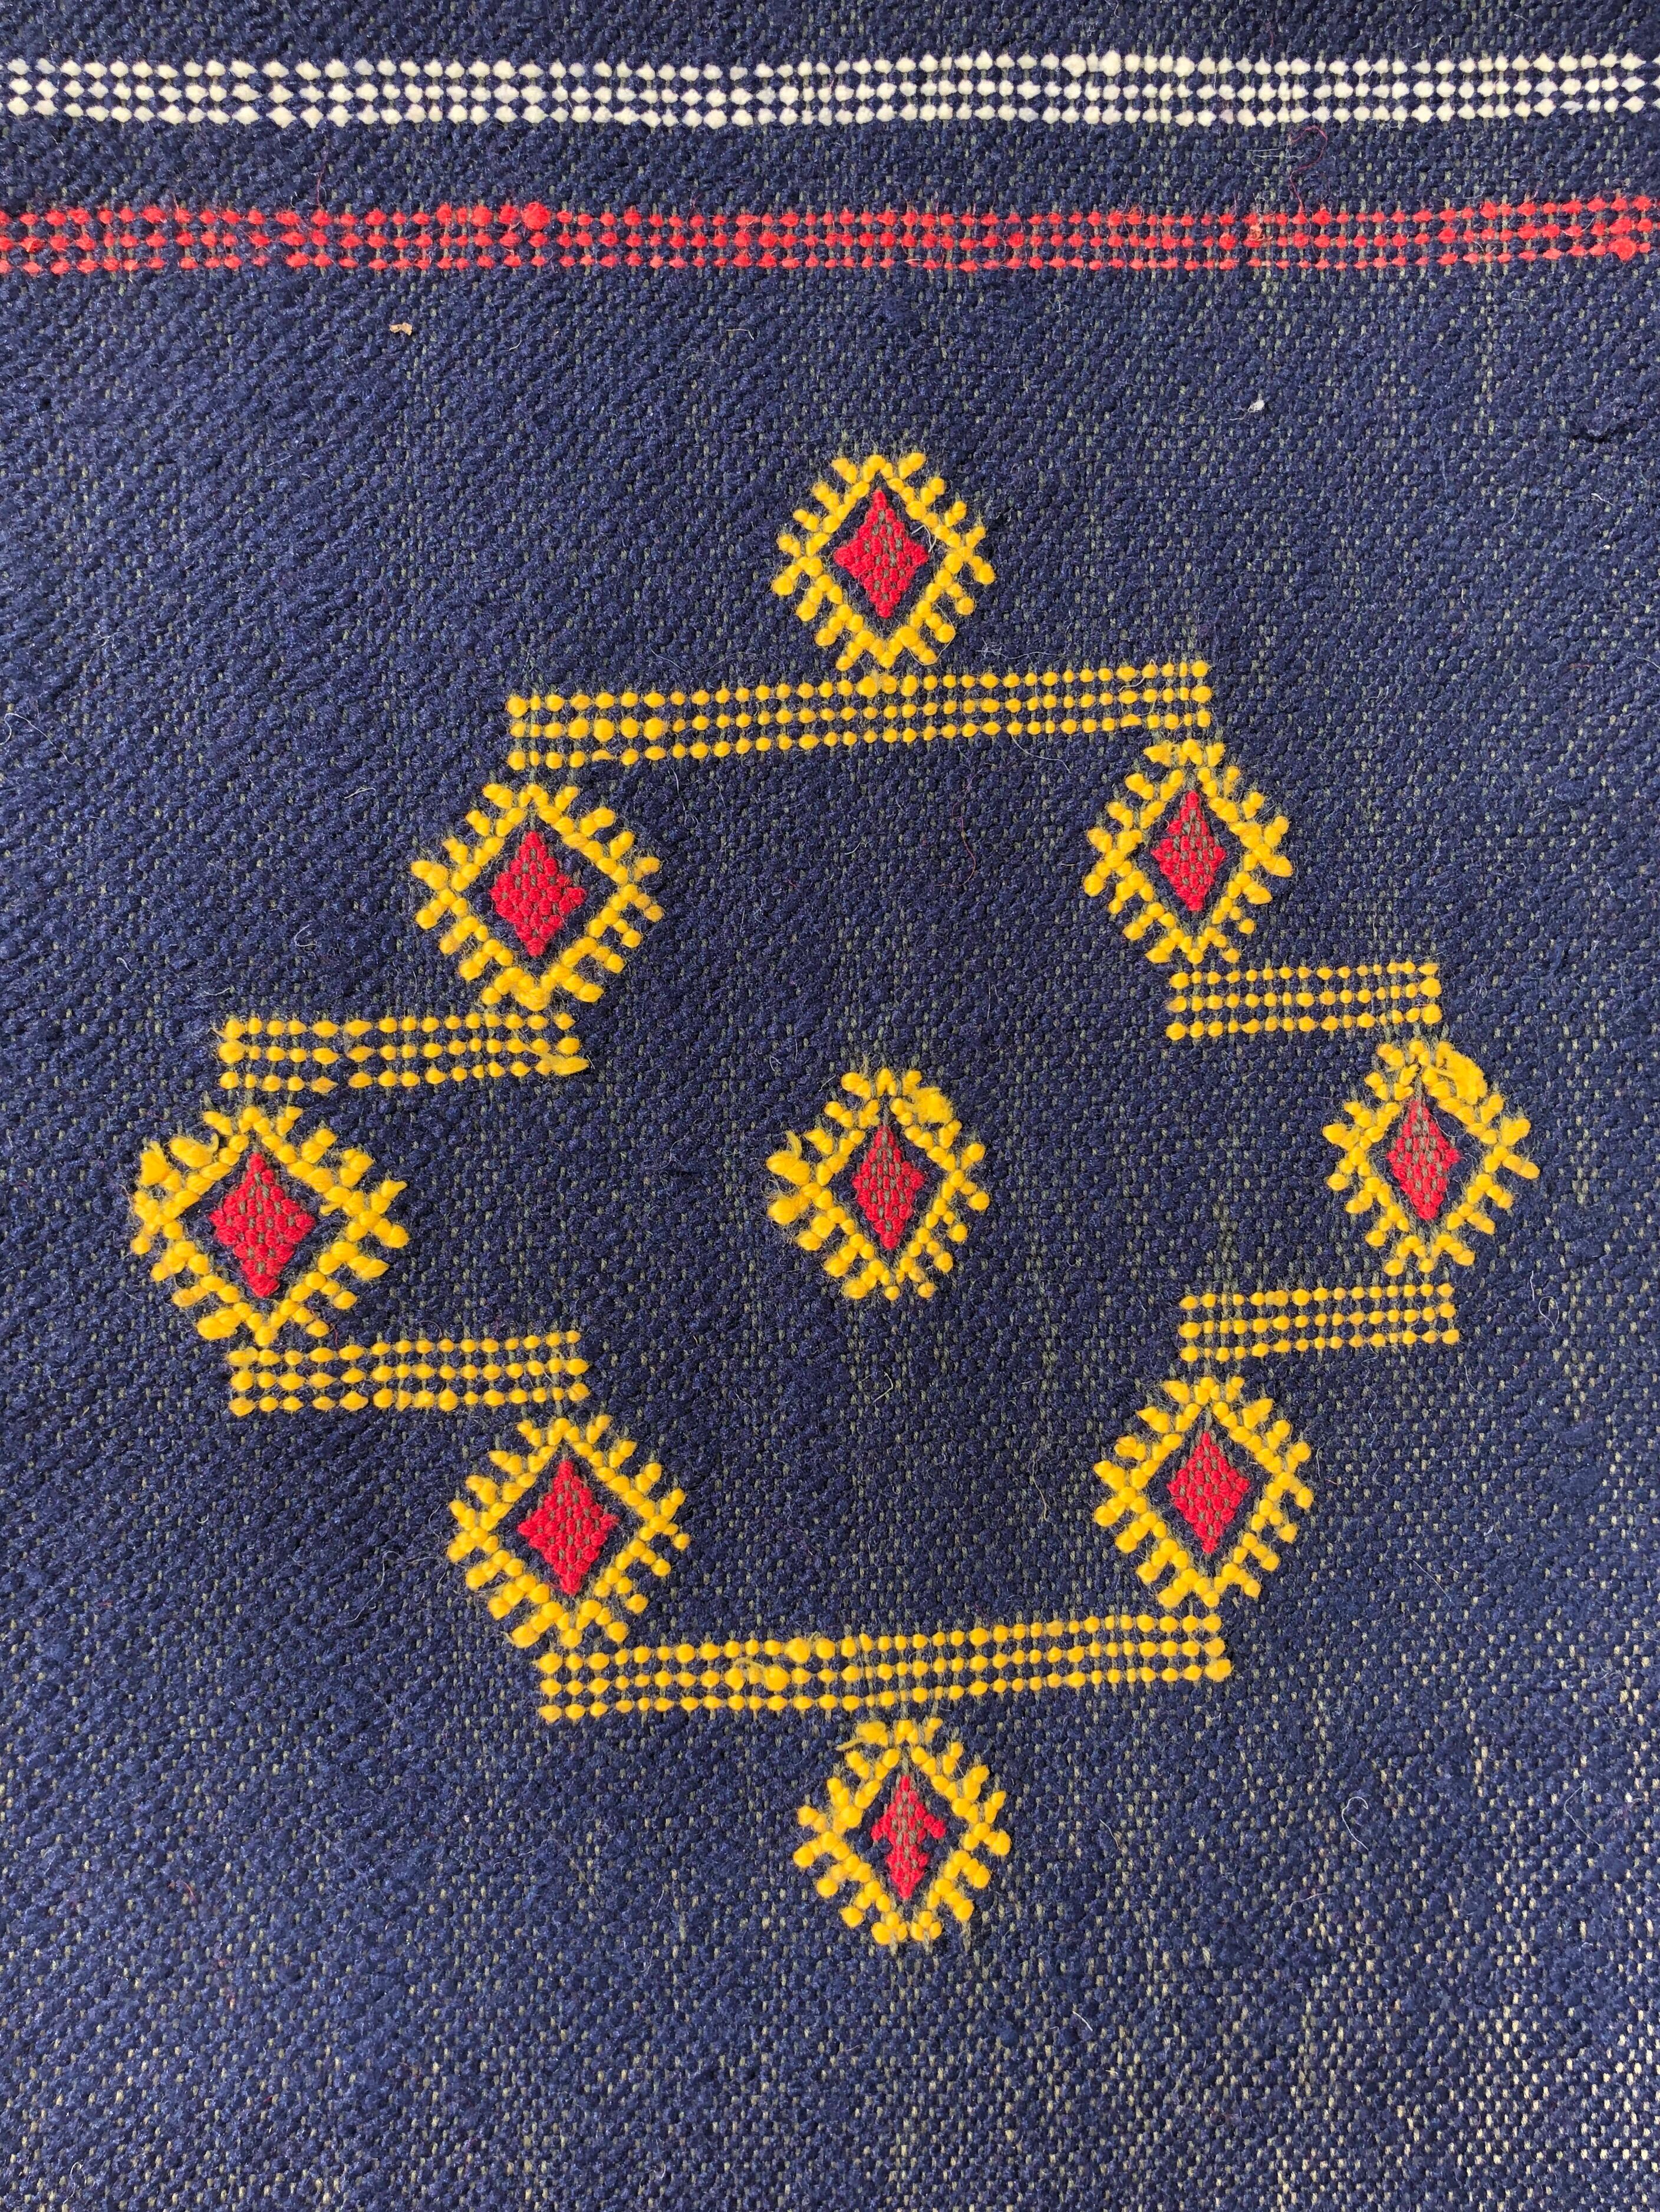 Hand-Woven Denim Blue Moroccan Kilim Rug Tribal Organic Cotton Flat-Weave Handmade Boho For Sale